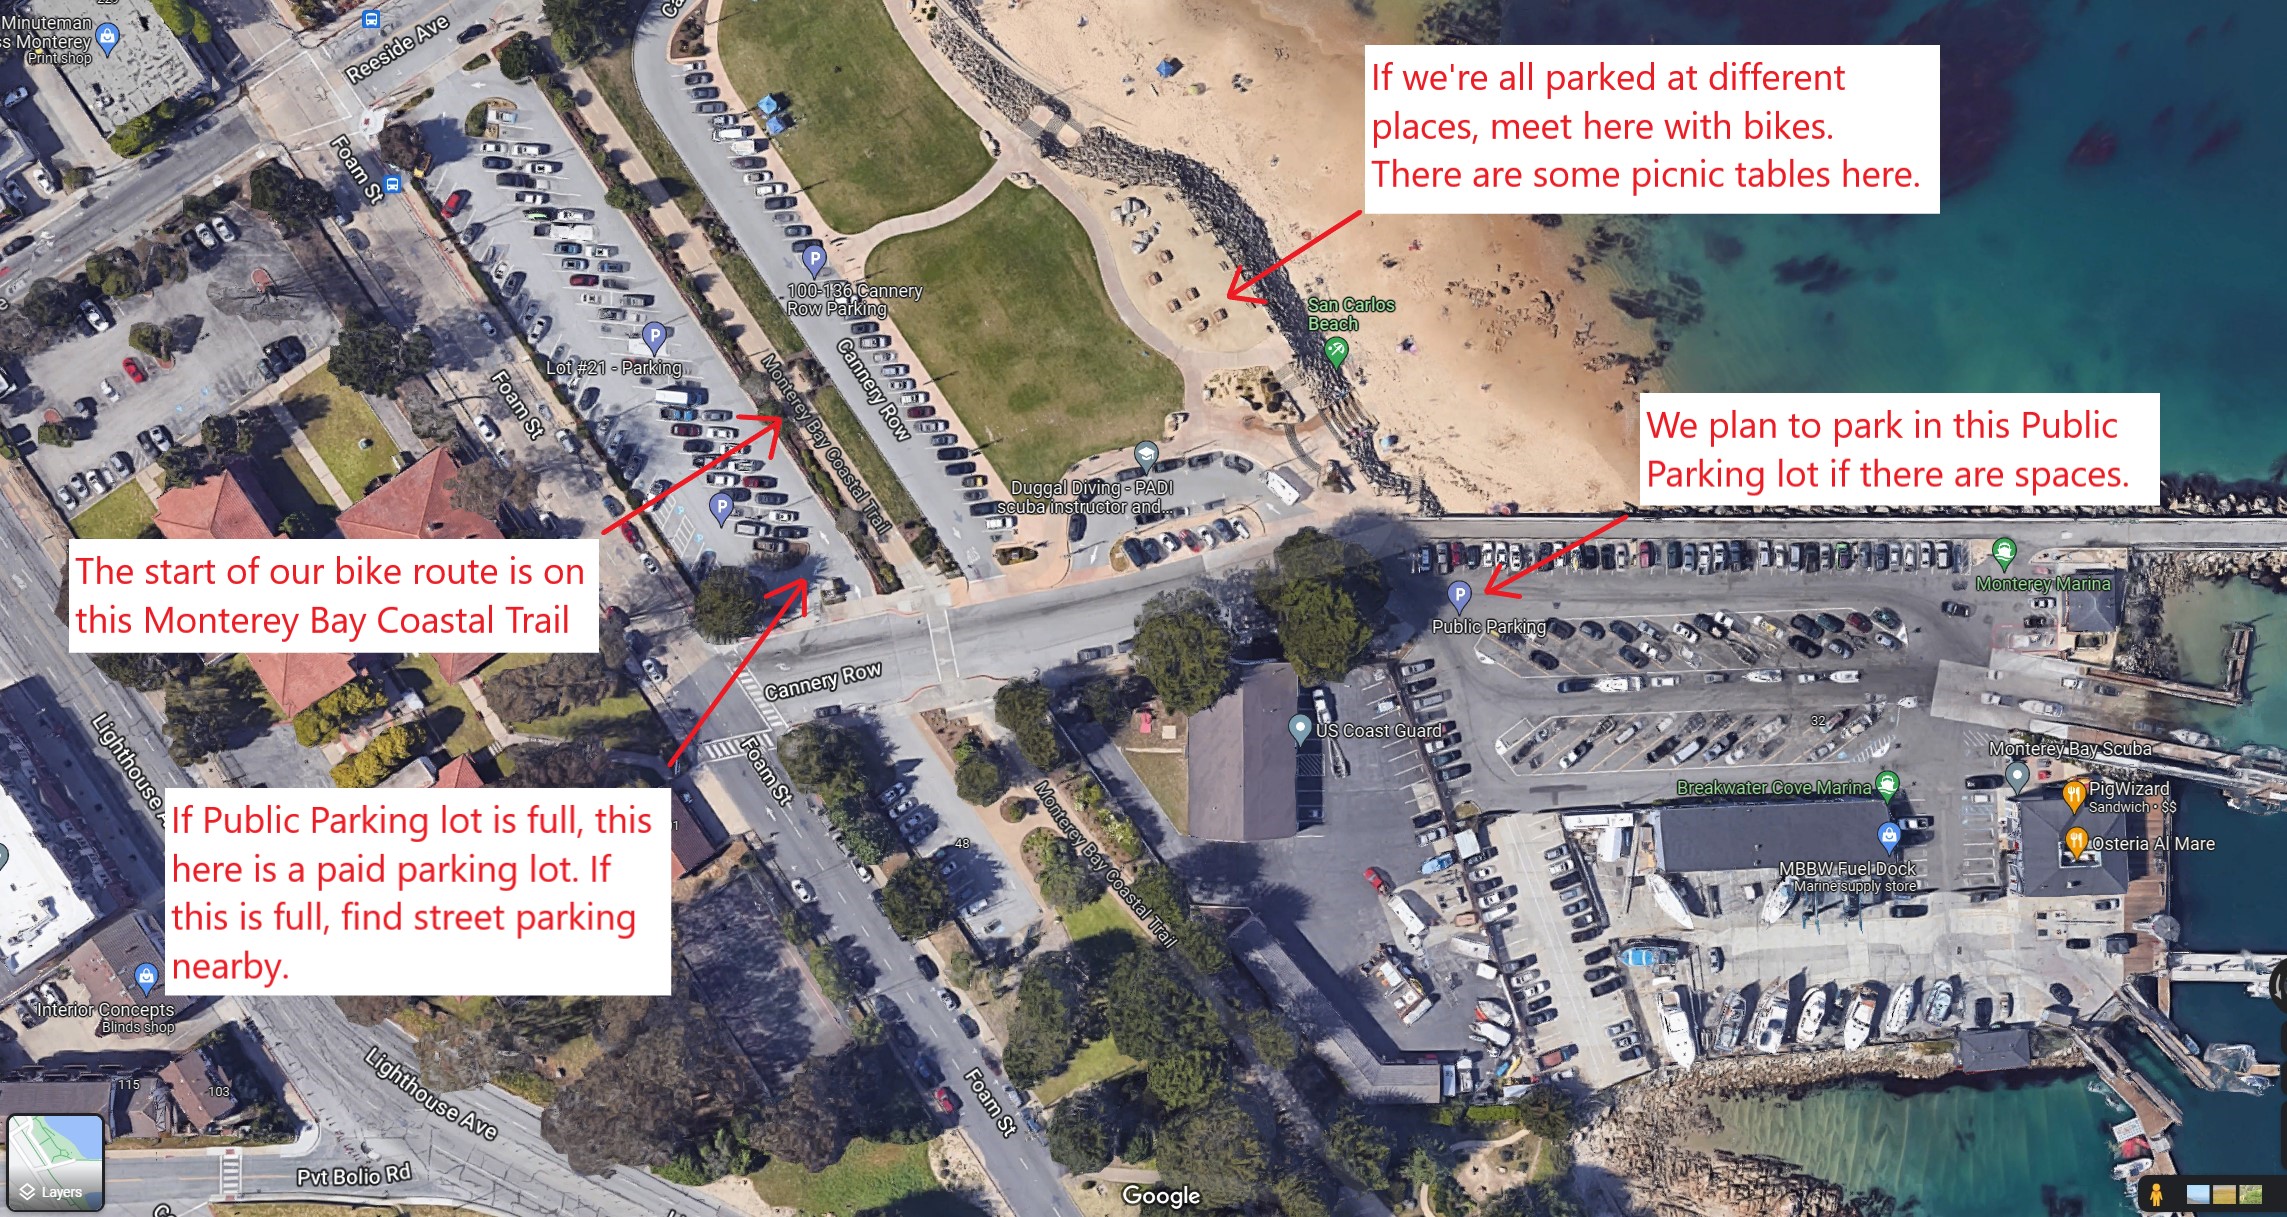 San Carlos Beach Nearby Parking Lots & Meeting Location